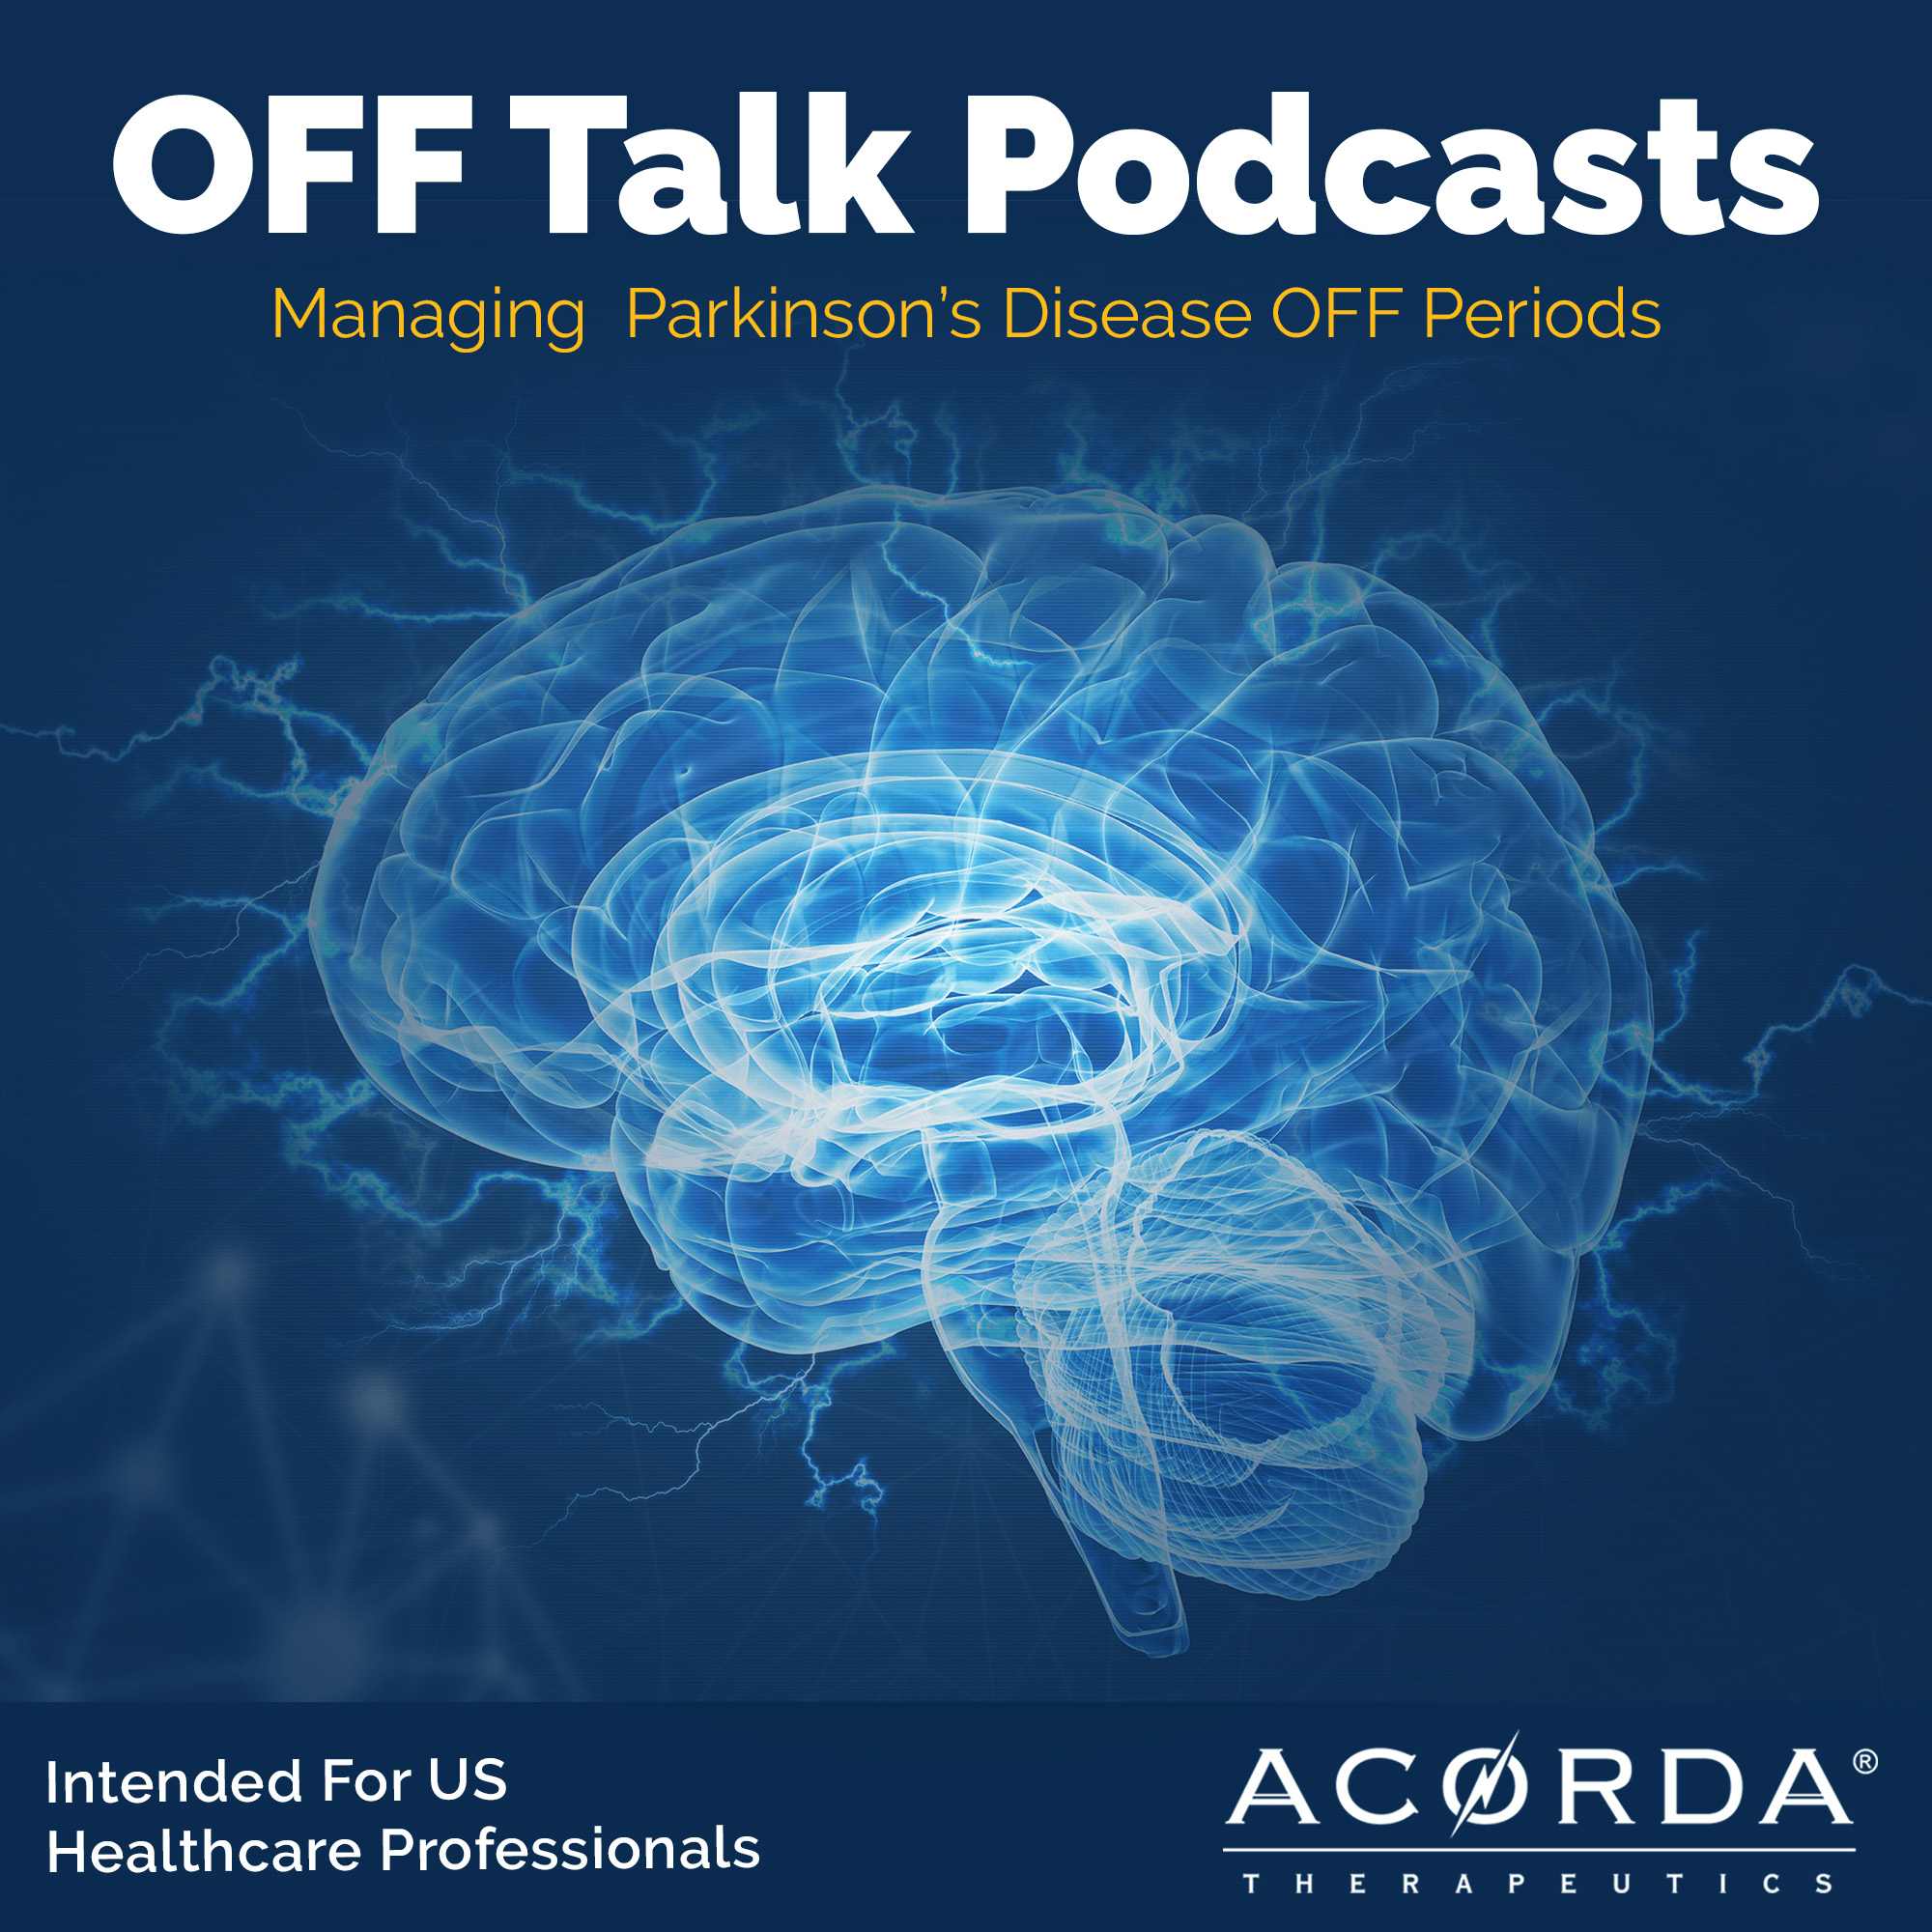 OffTalk - Managing Parkinson's Disease OFF Periods